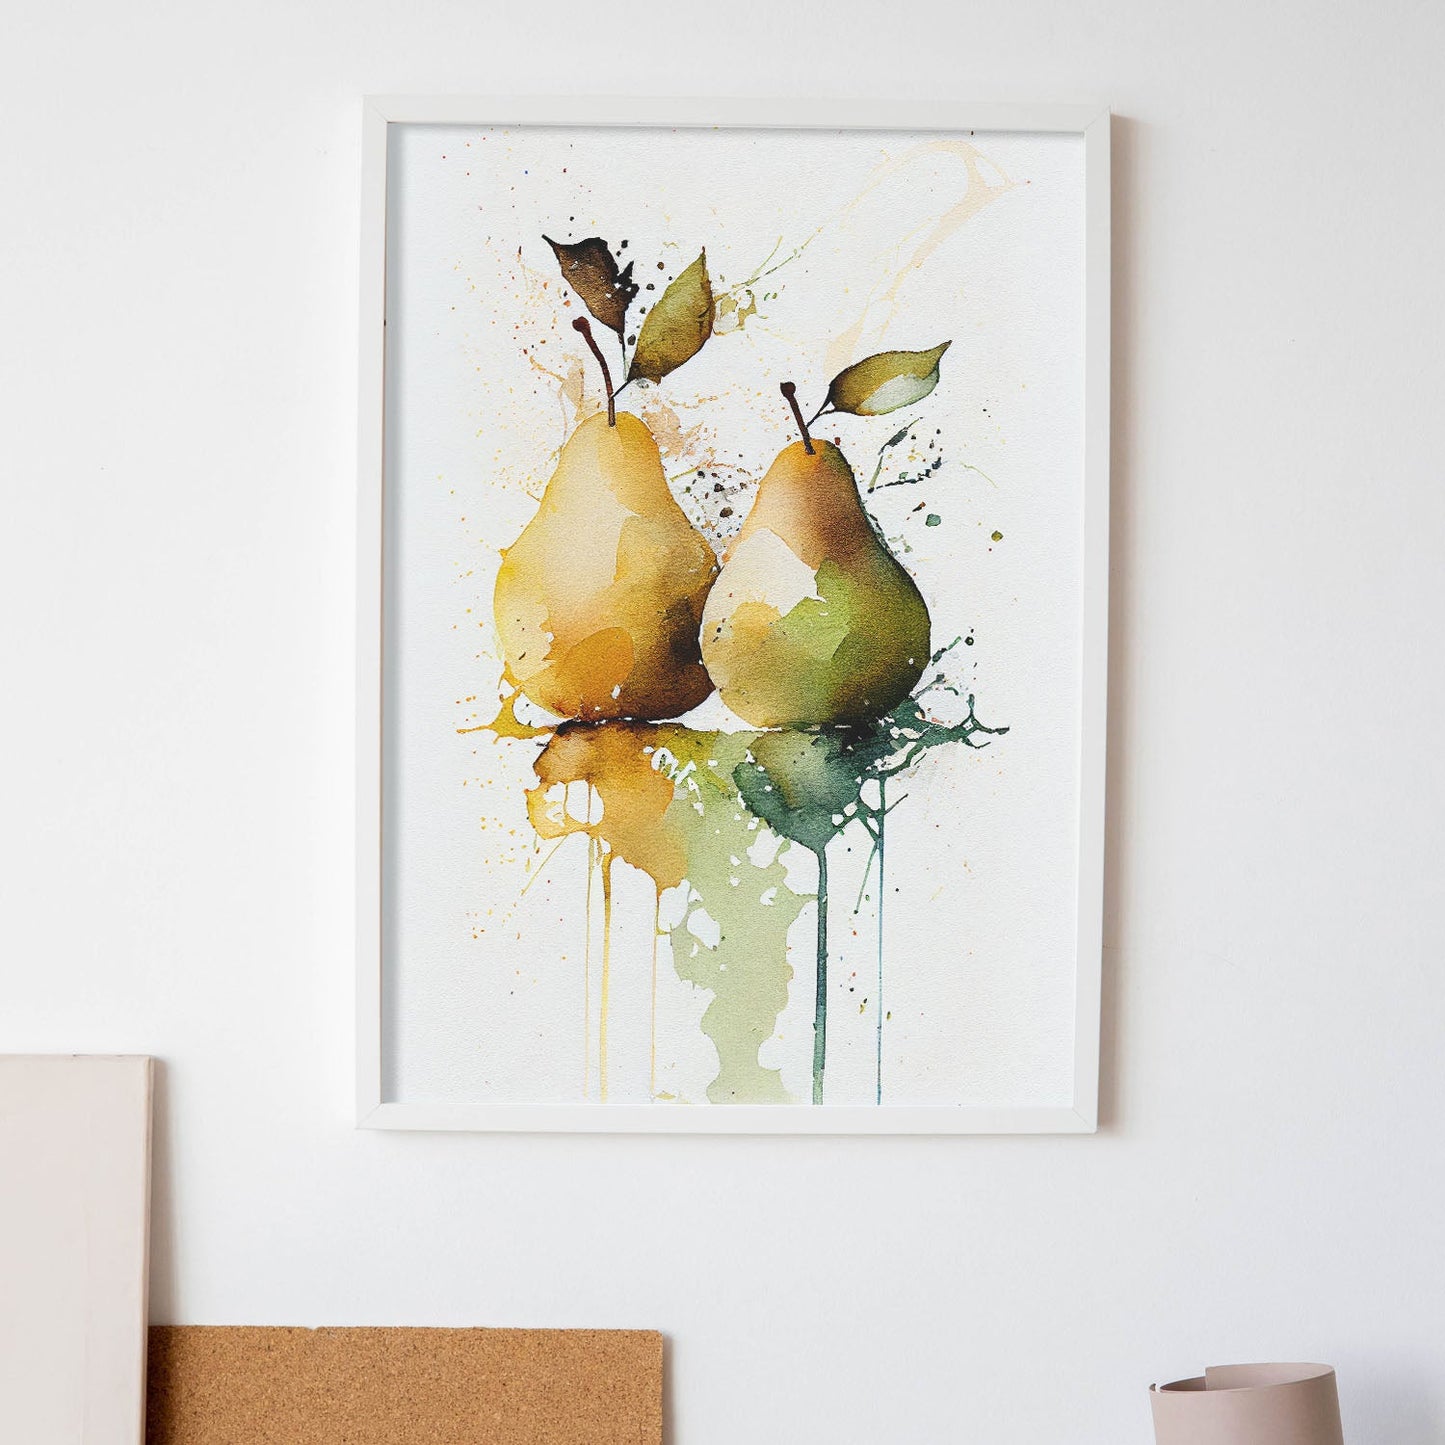 Nacnic minimalist Pears. Aesthetic Wall Art Prints for Bedroom or Living Room Design.-Artwork-Nacnic-A4-Sin Marco-Nacnic Estudio SL